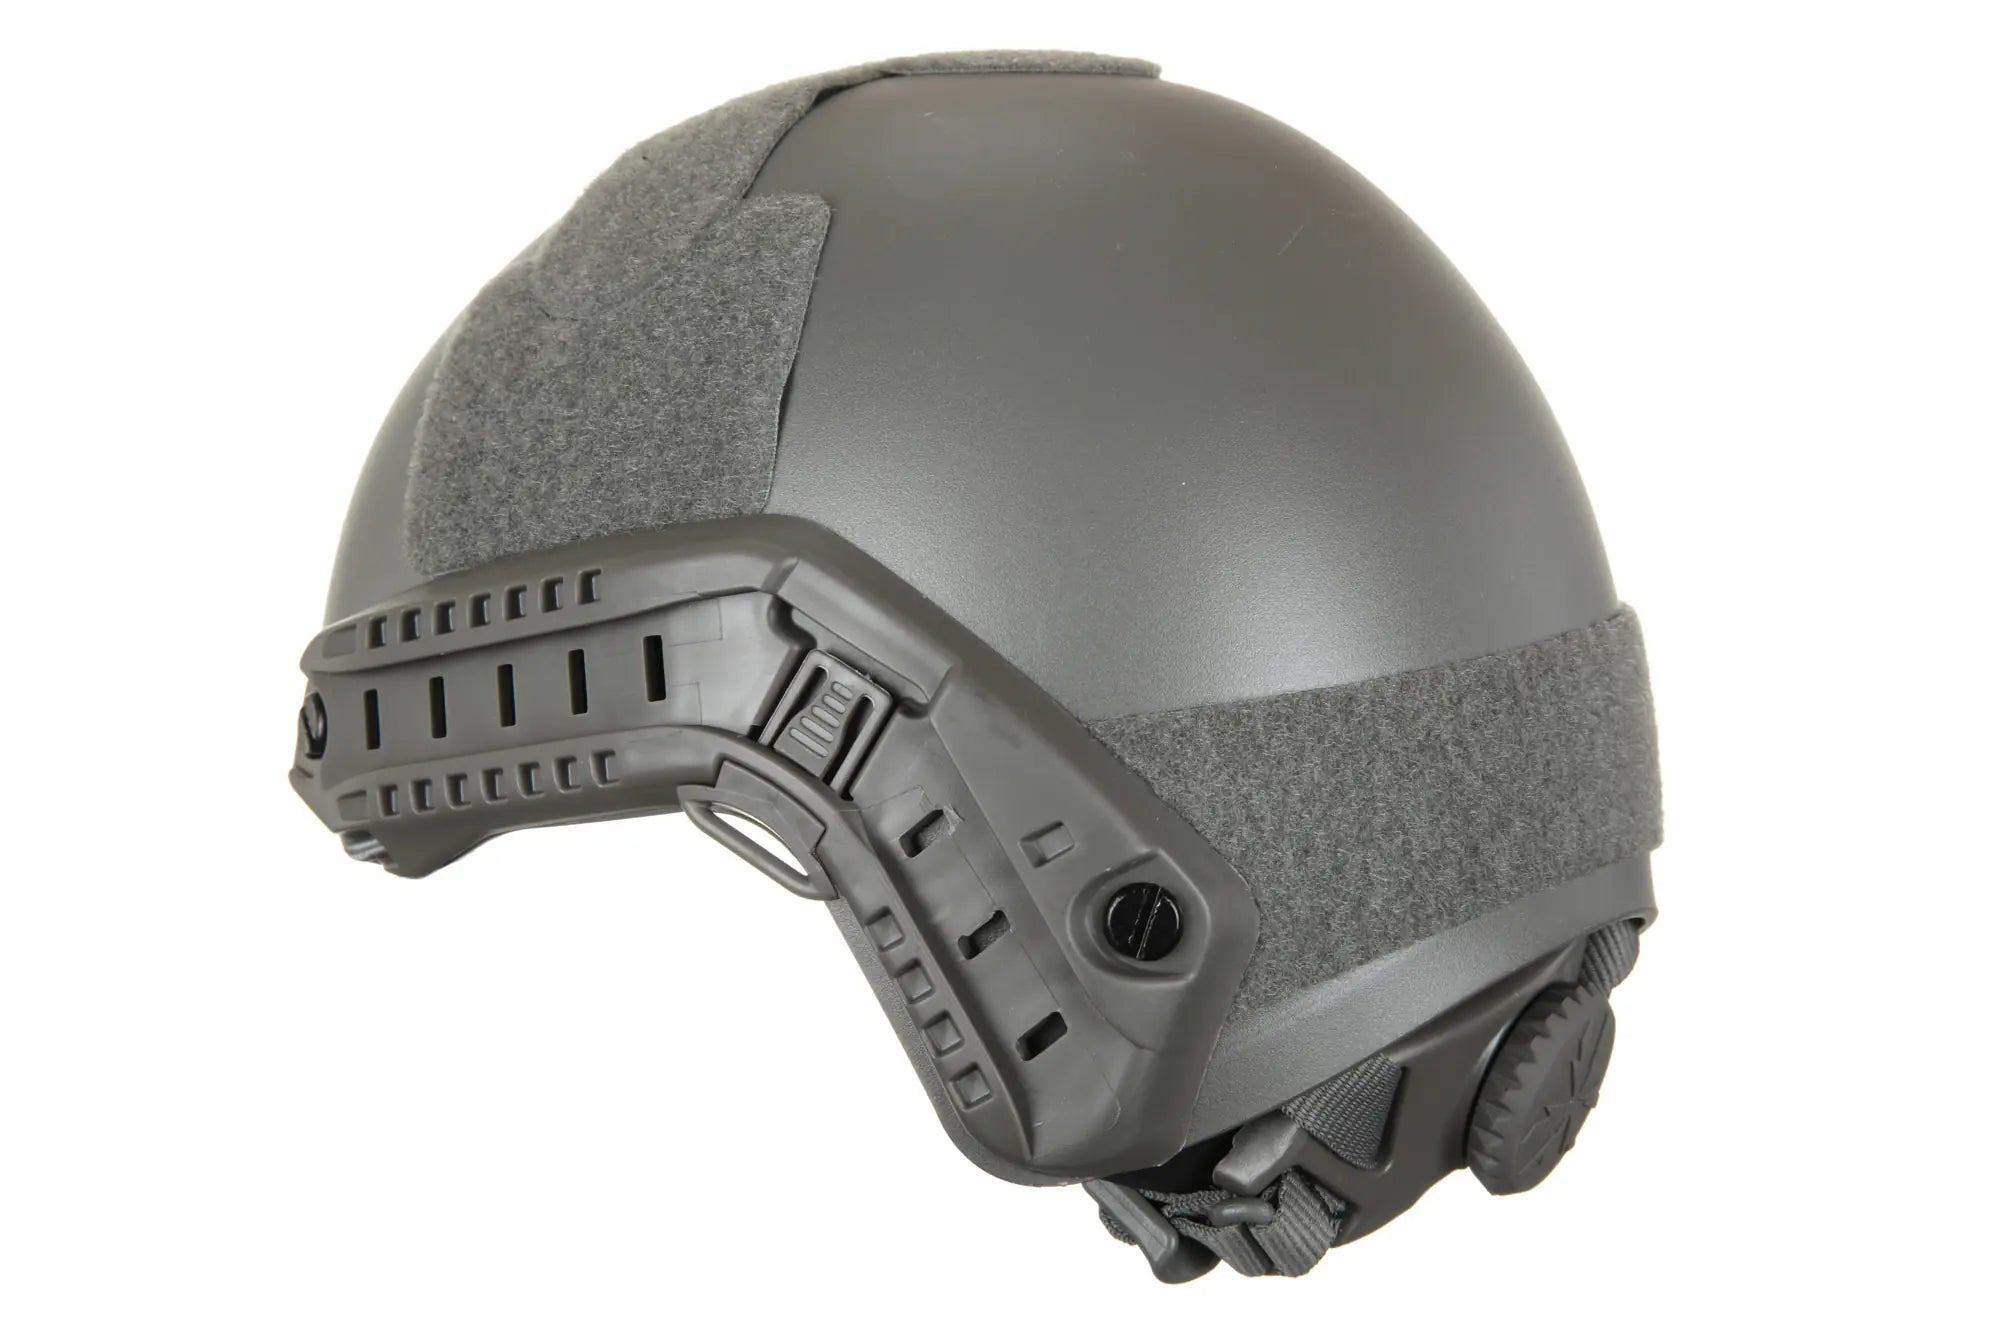 Emerson Gear FAST Helmet replica MH TYPE Foliage Green-2